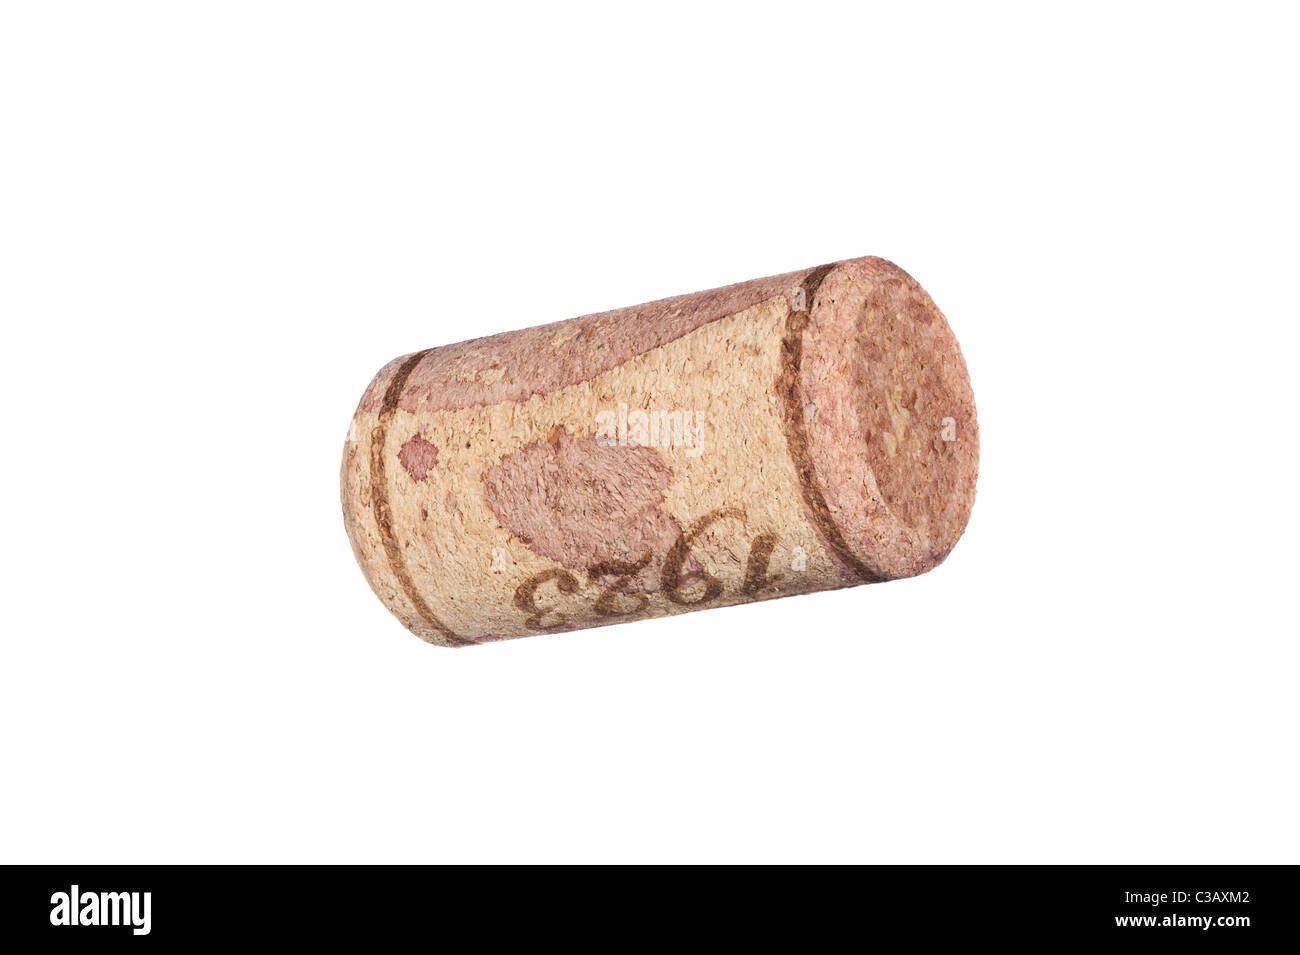 Wine bottle cork isolated on a white background Stock Photo